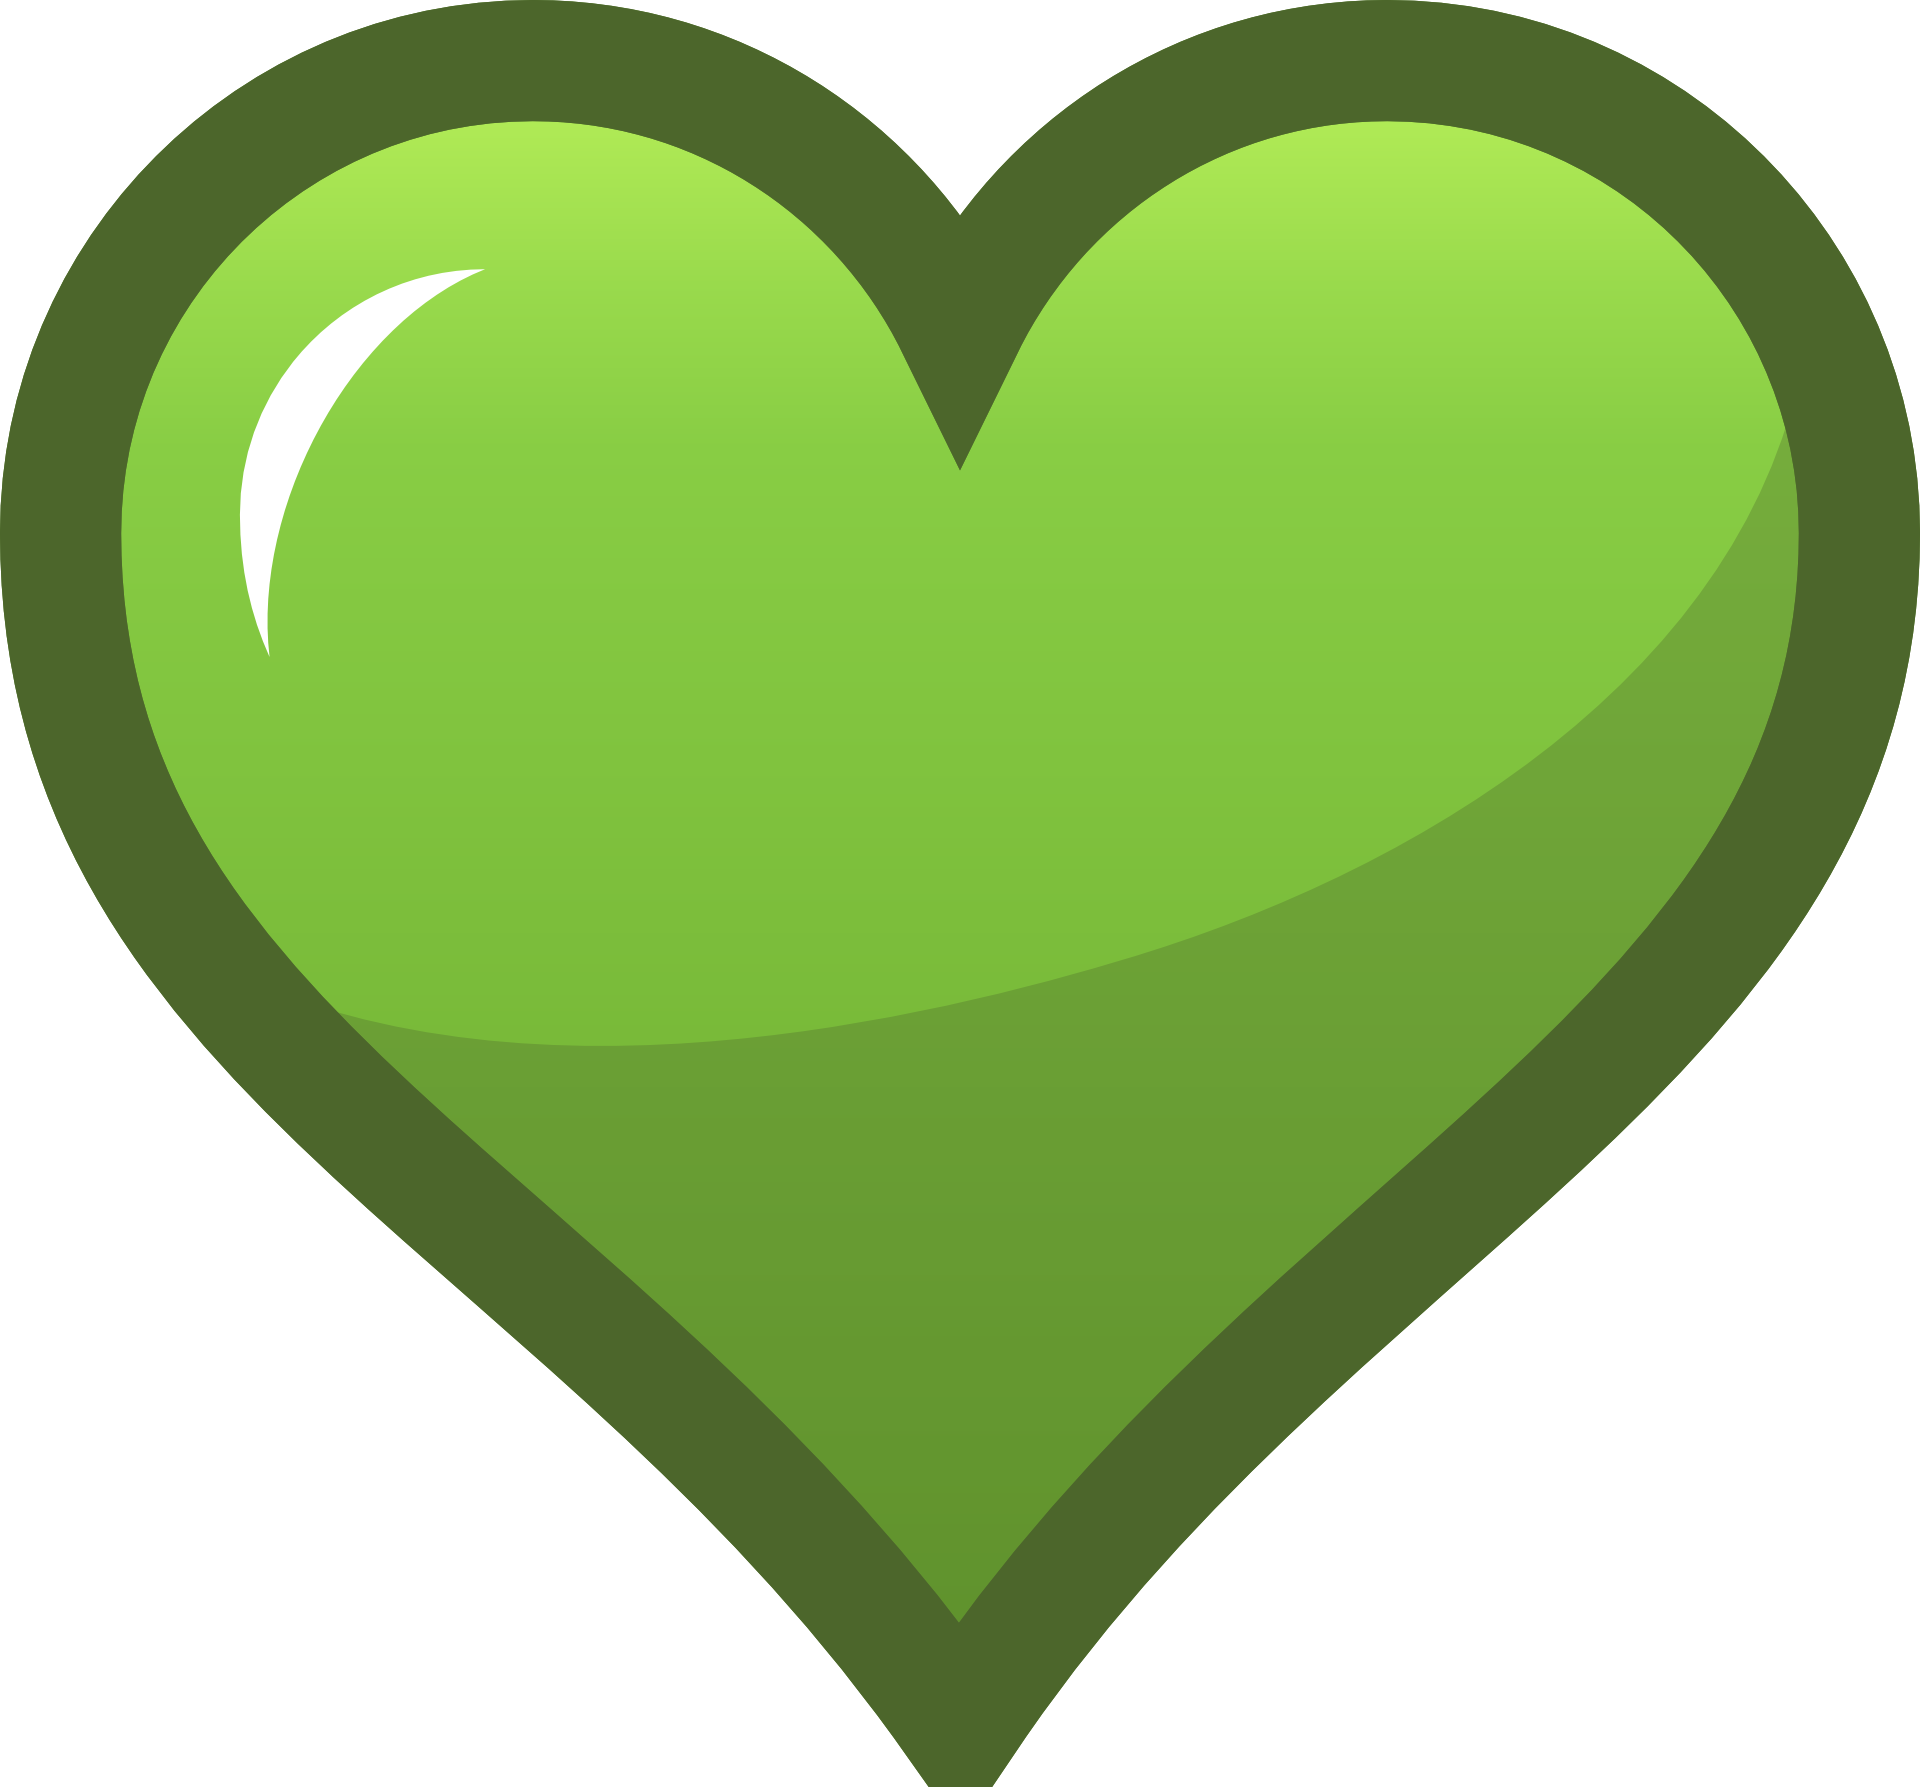 Big green heart clipart free image